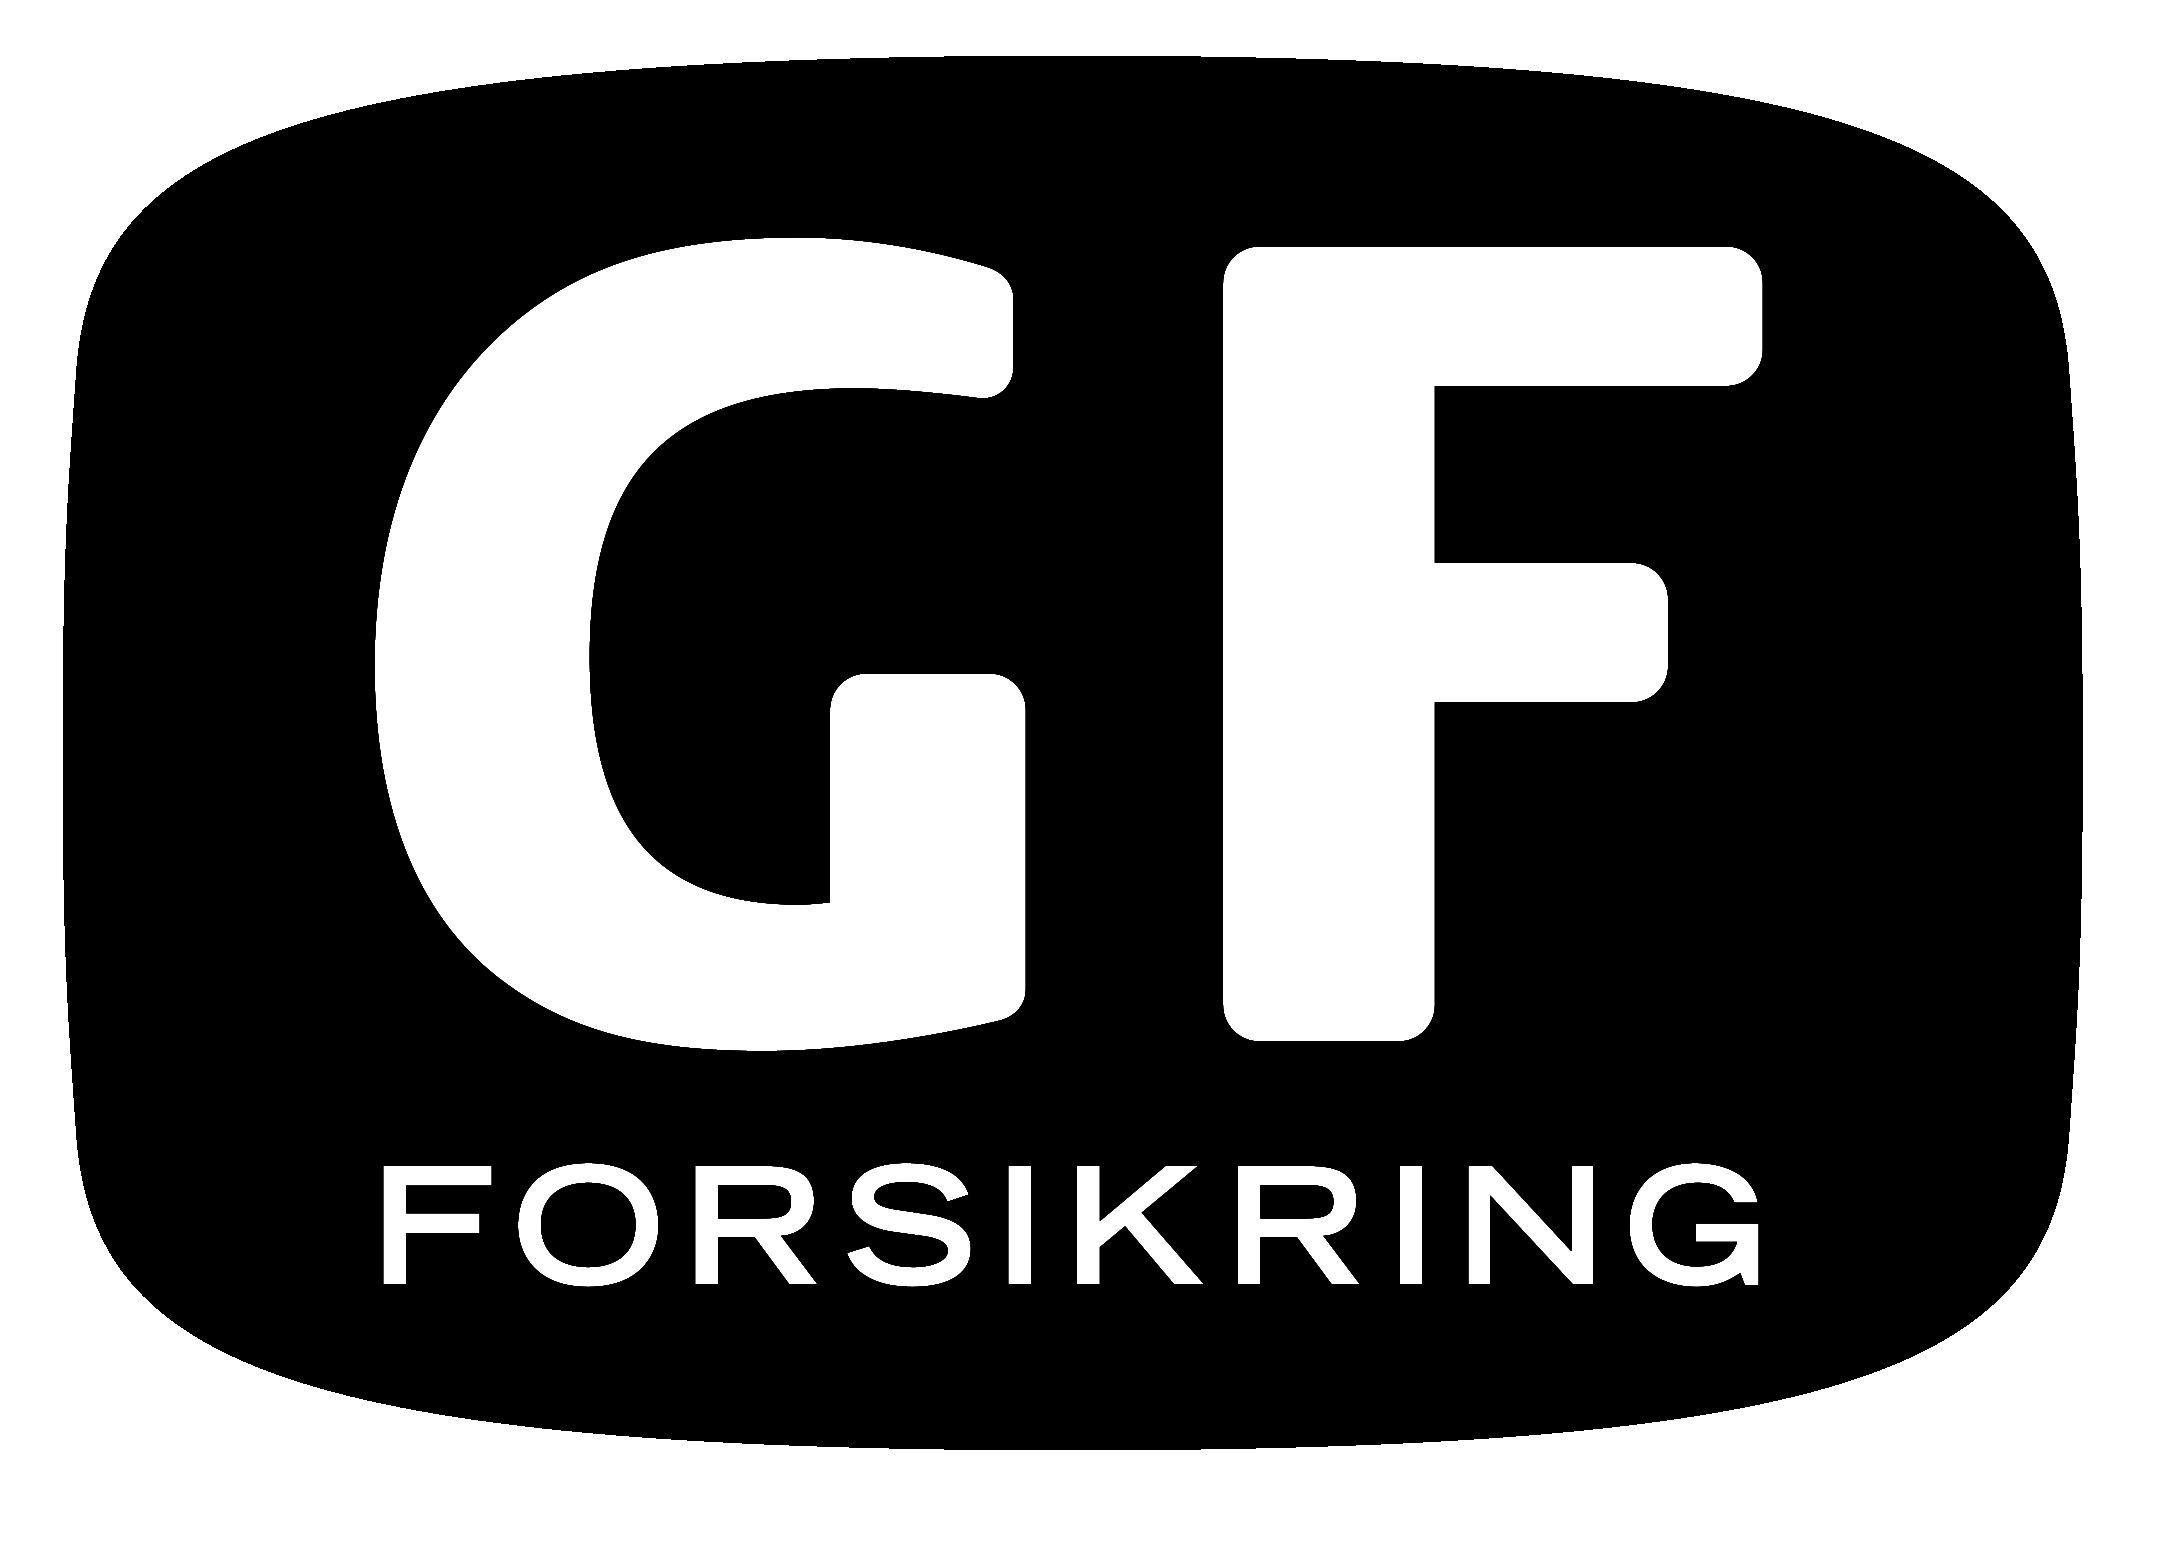 nordlys logo